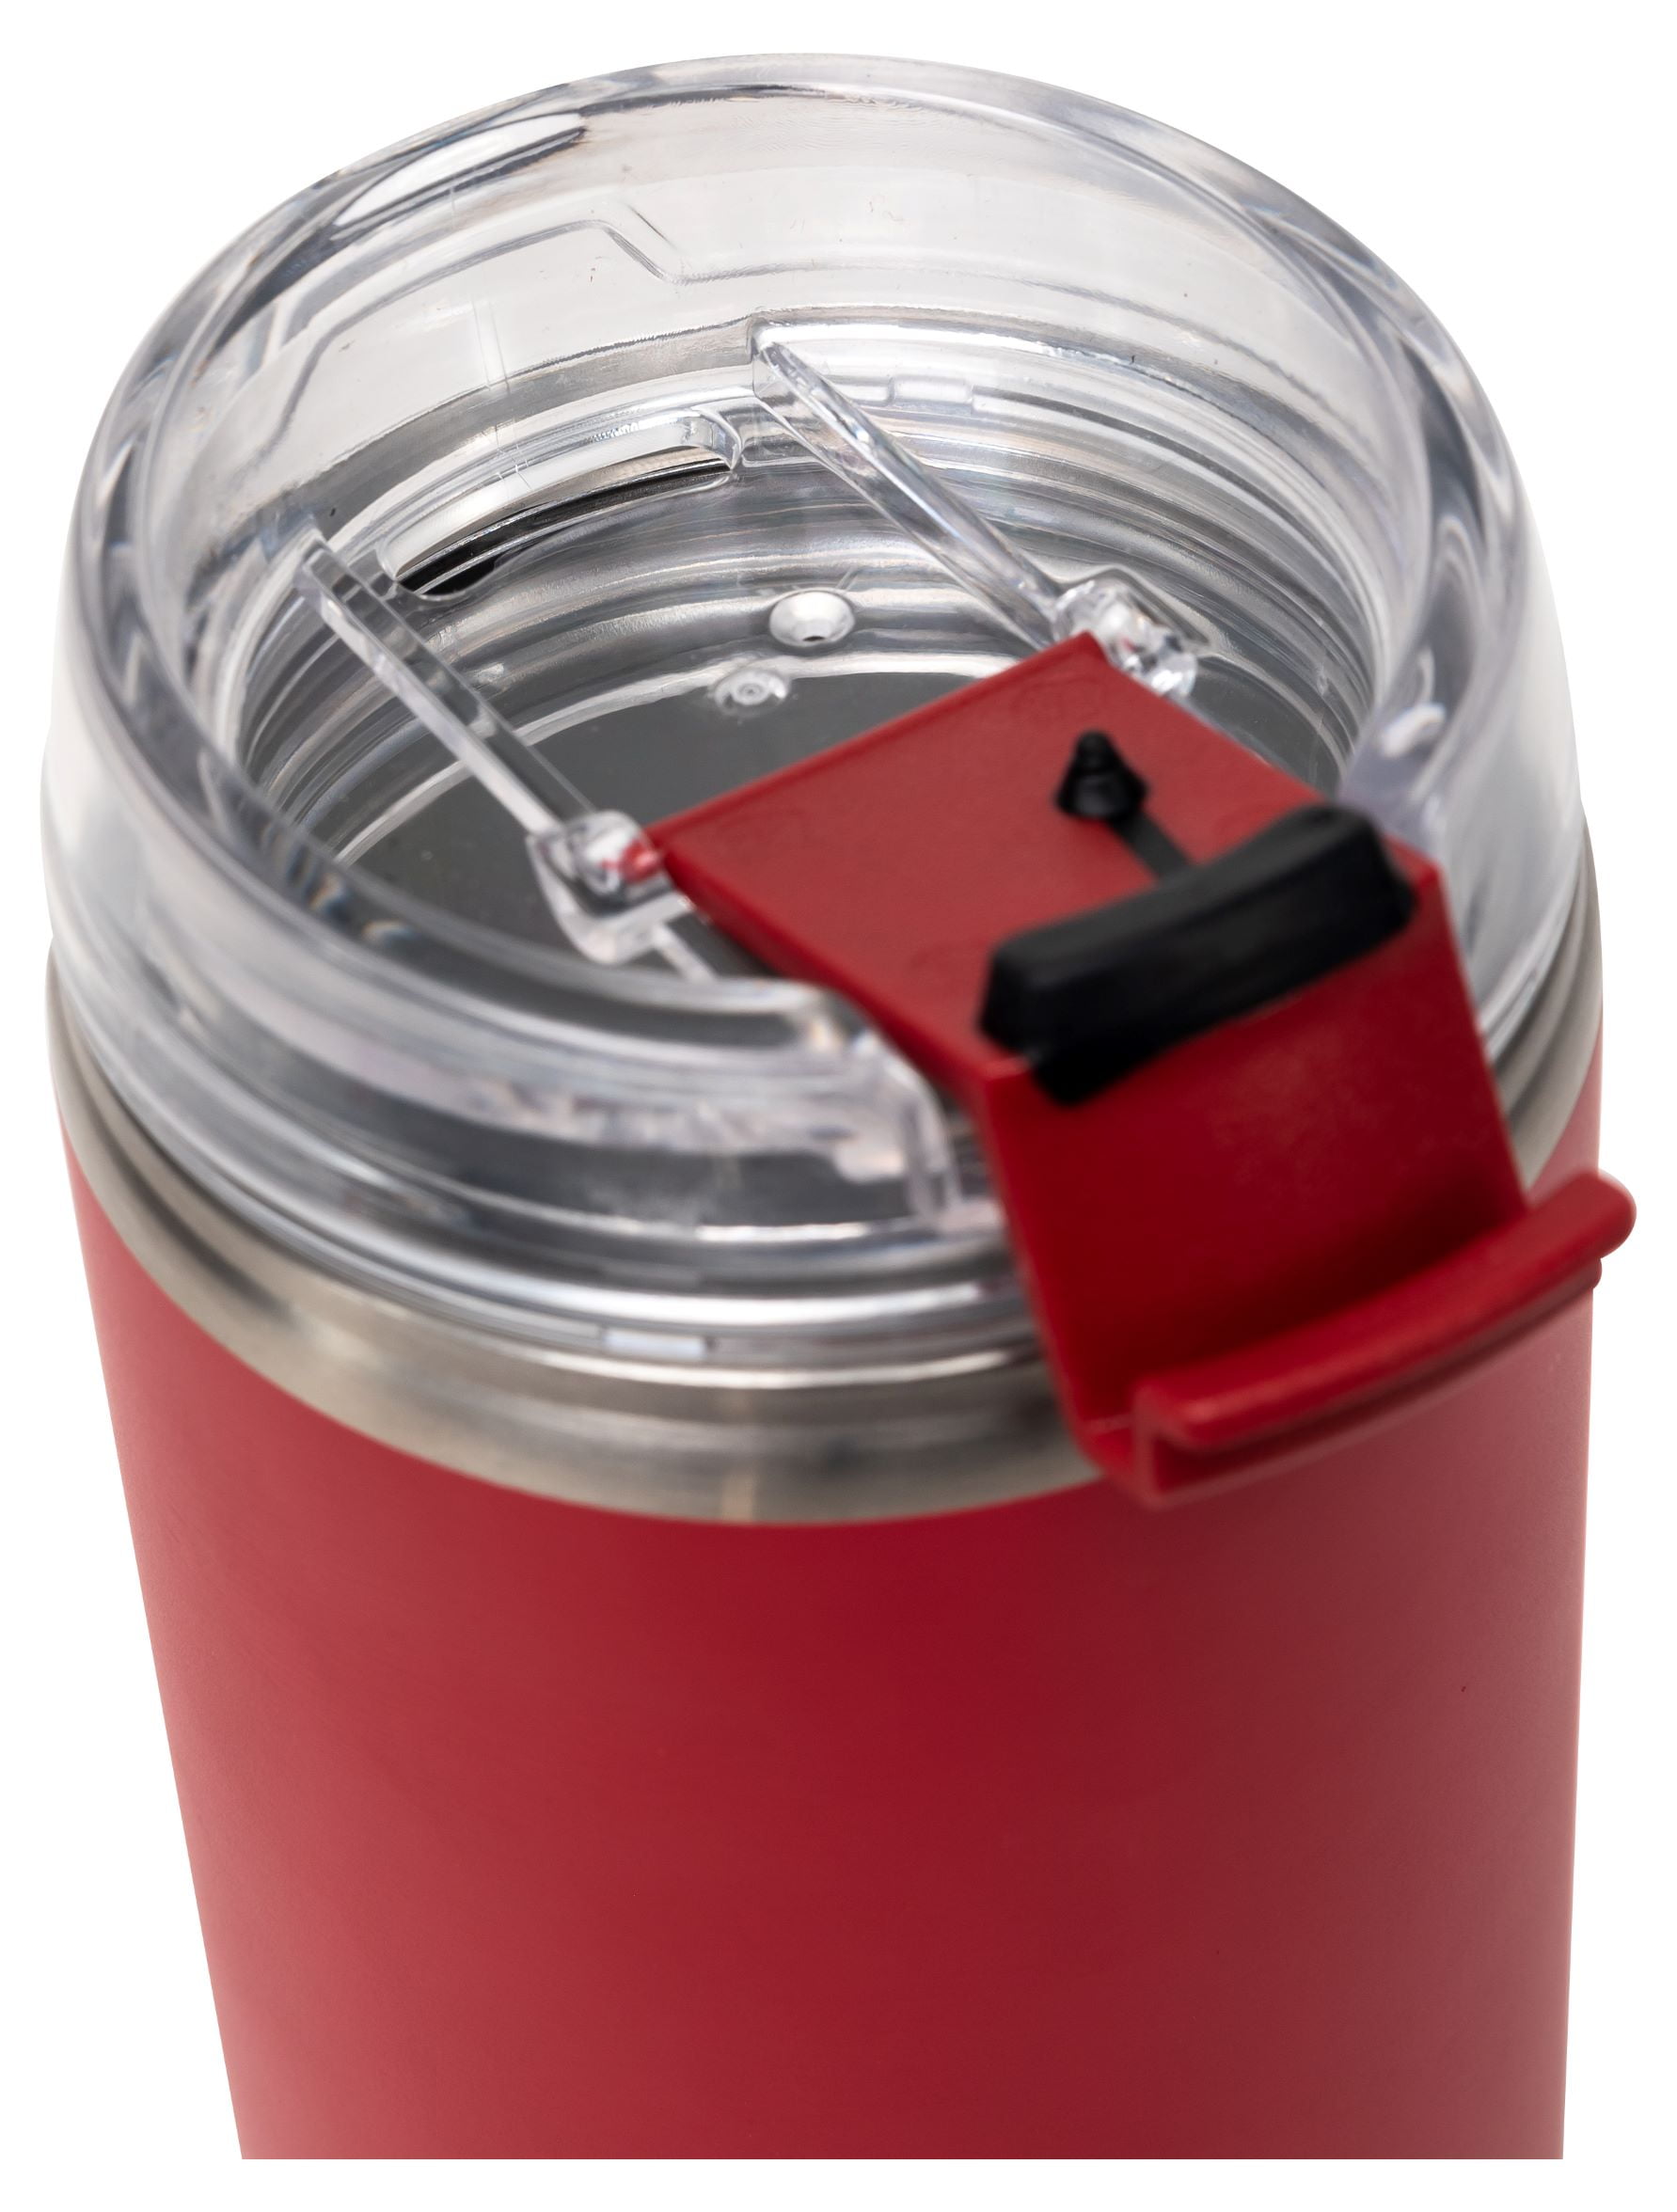 FlasKap Volst 22 oz Tumbler with standard lid- 3 Colors – Circle C Living